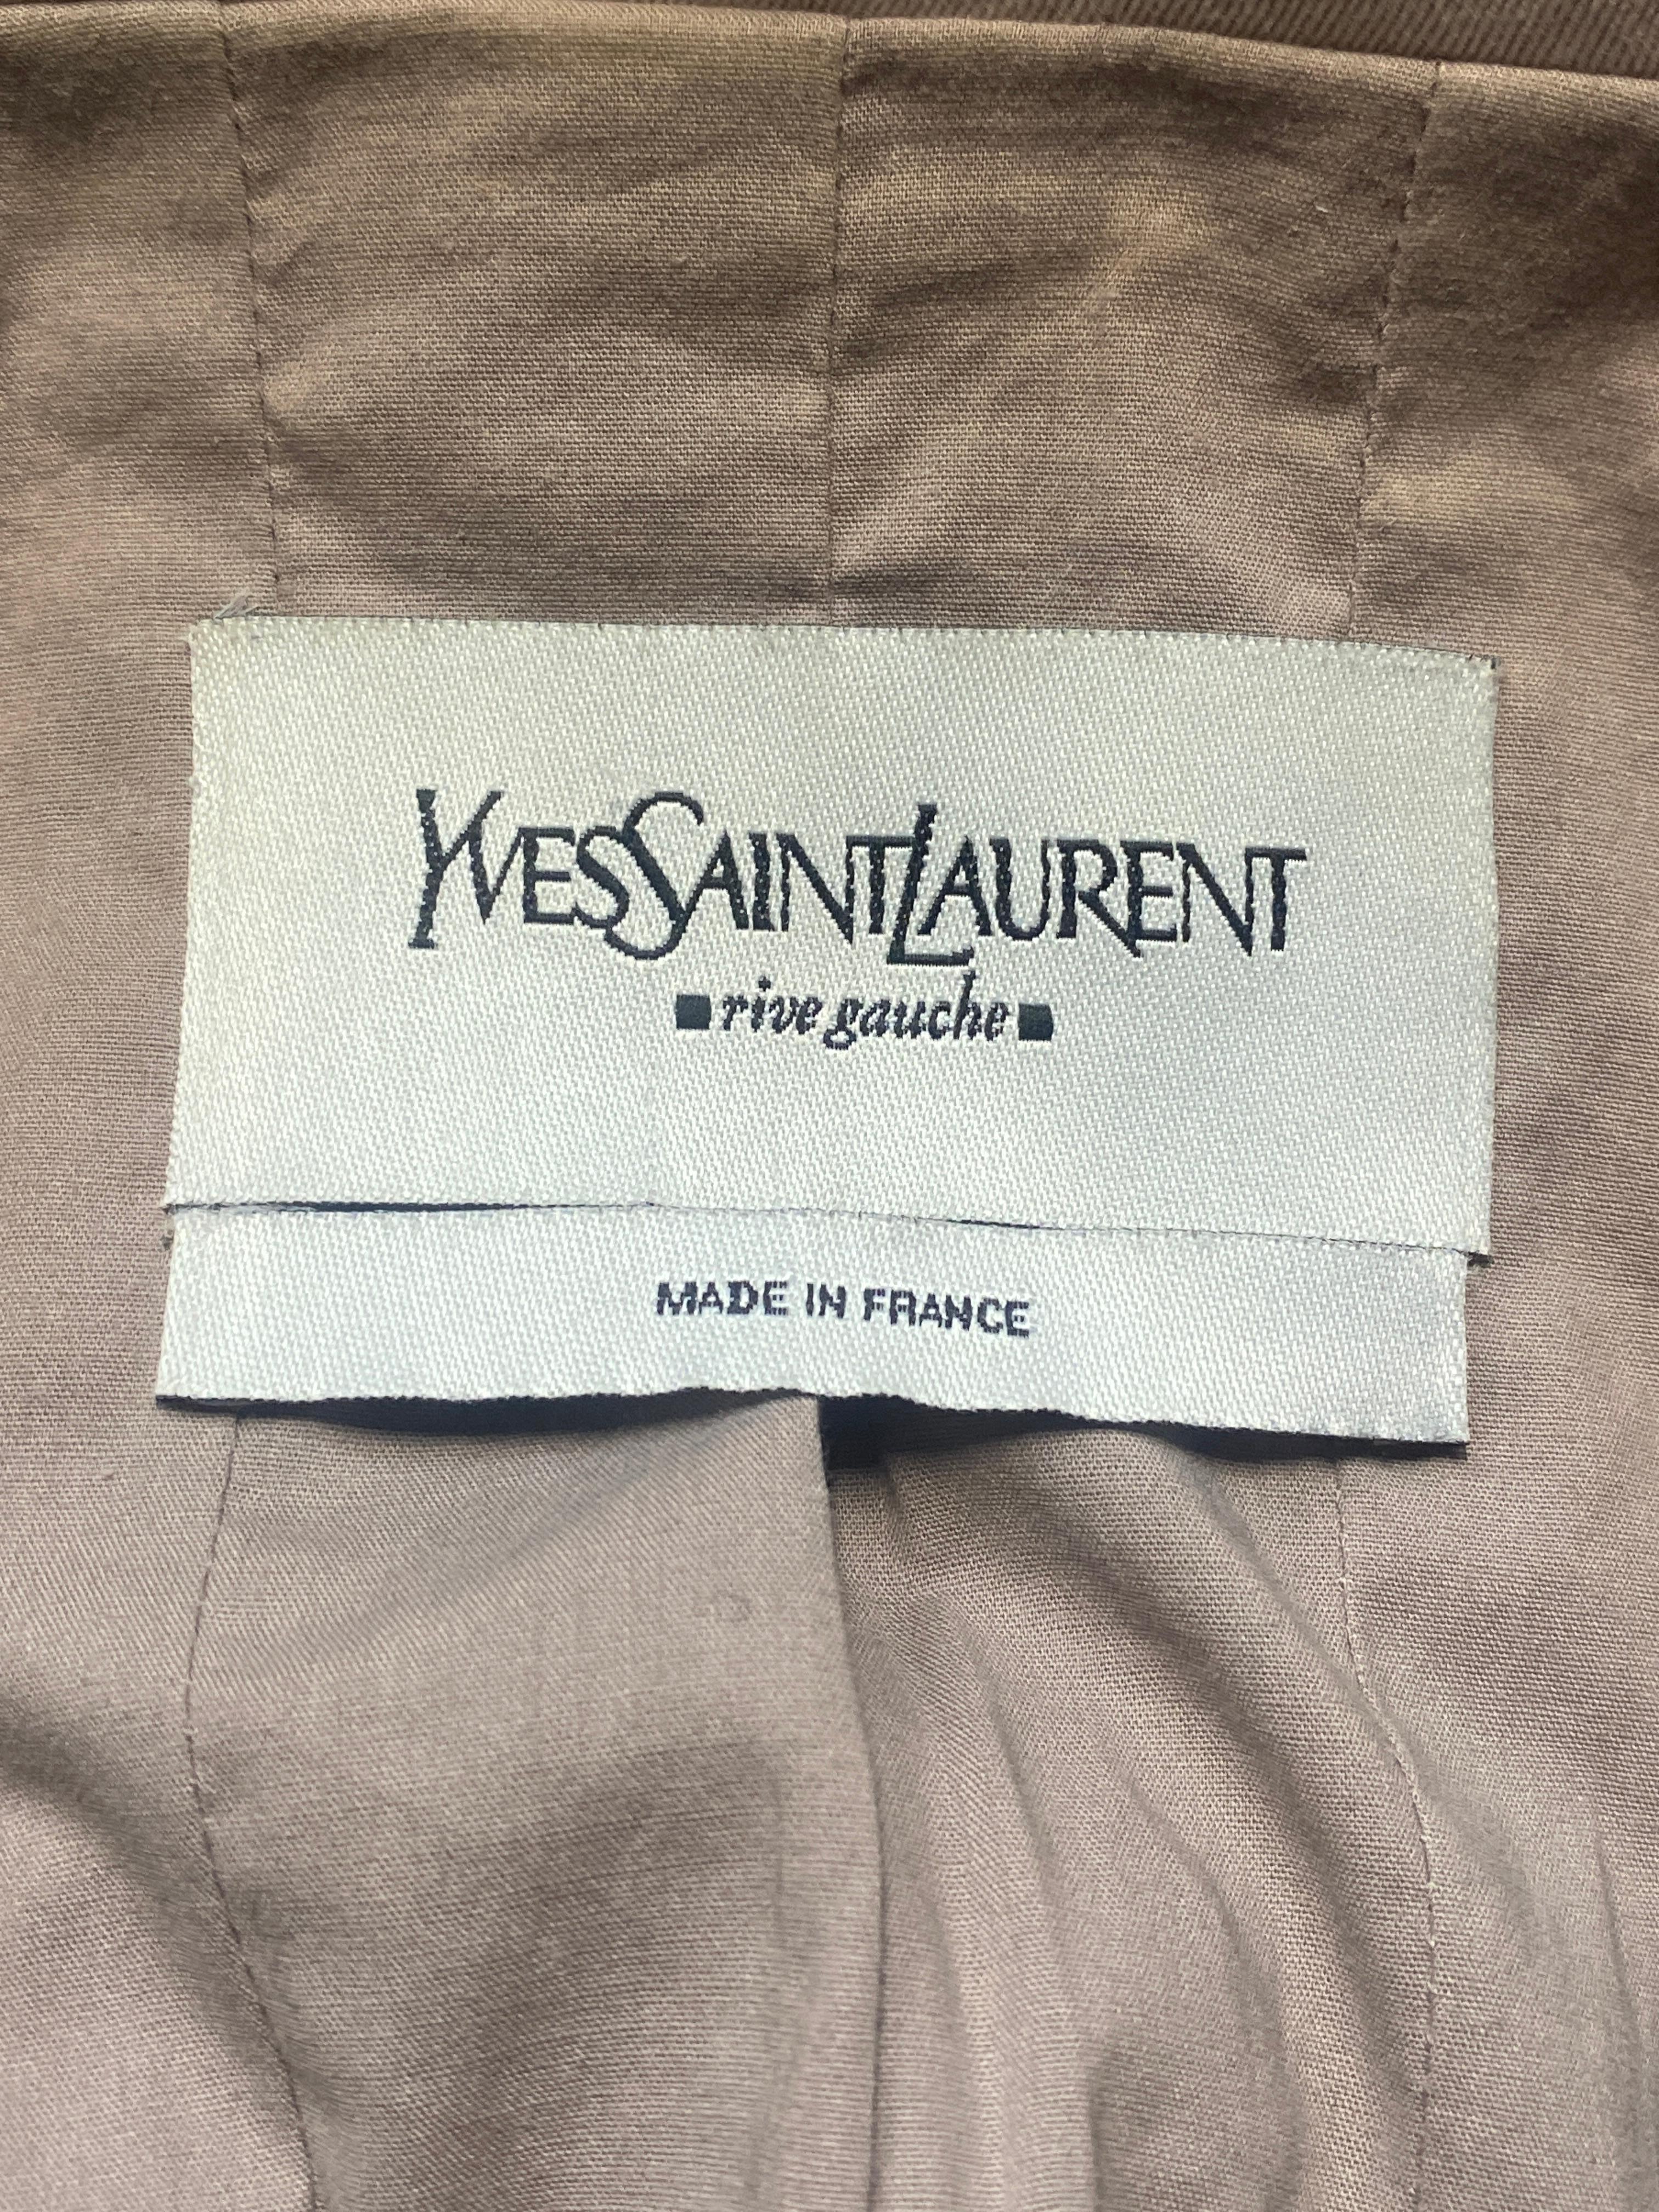 2003 Tom Ford for Yves Saint Laurent Belted Jacket For Sale 2